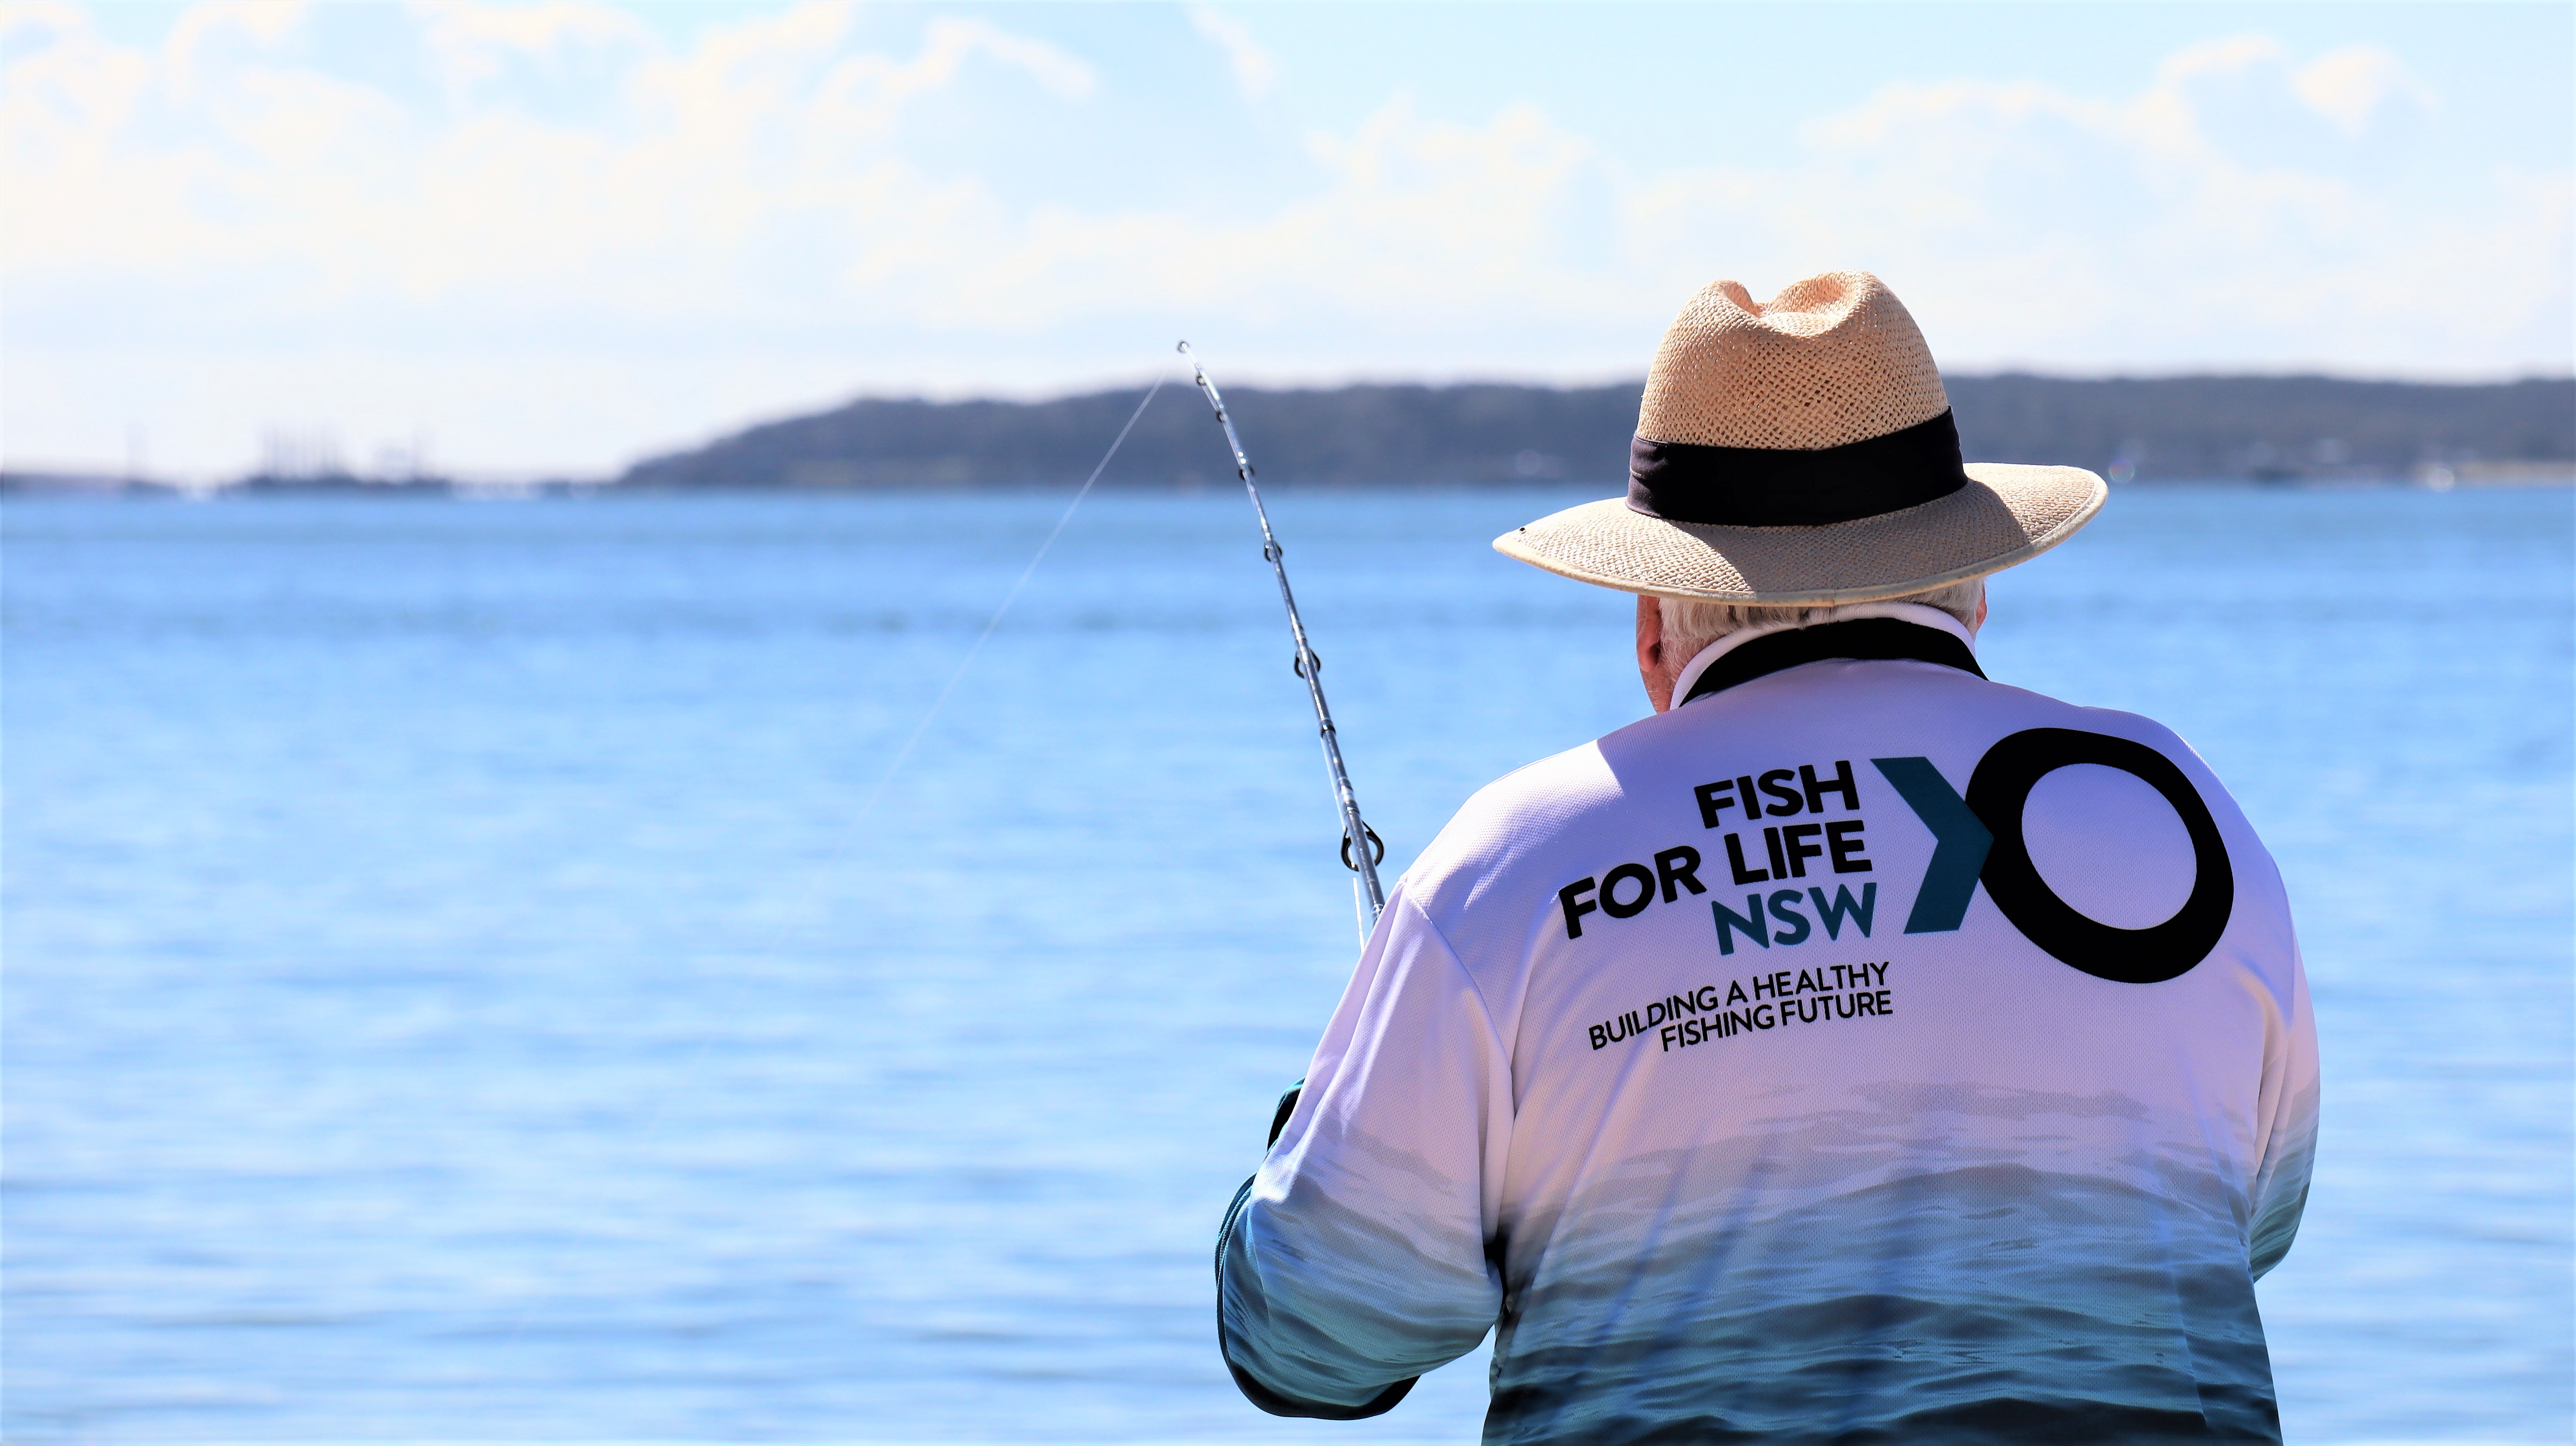 https://www.dpi.nsw.gov.au/__data/assets/image/0010/1203895/Fish-for-Life-logo-on-fisherman.jpg